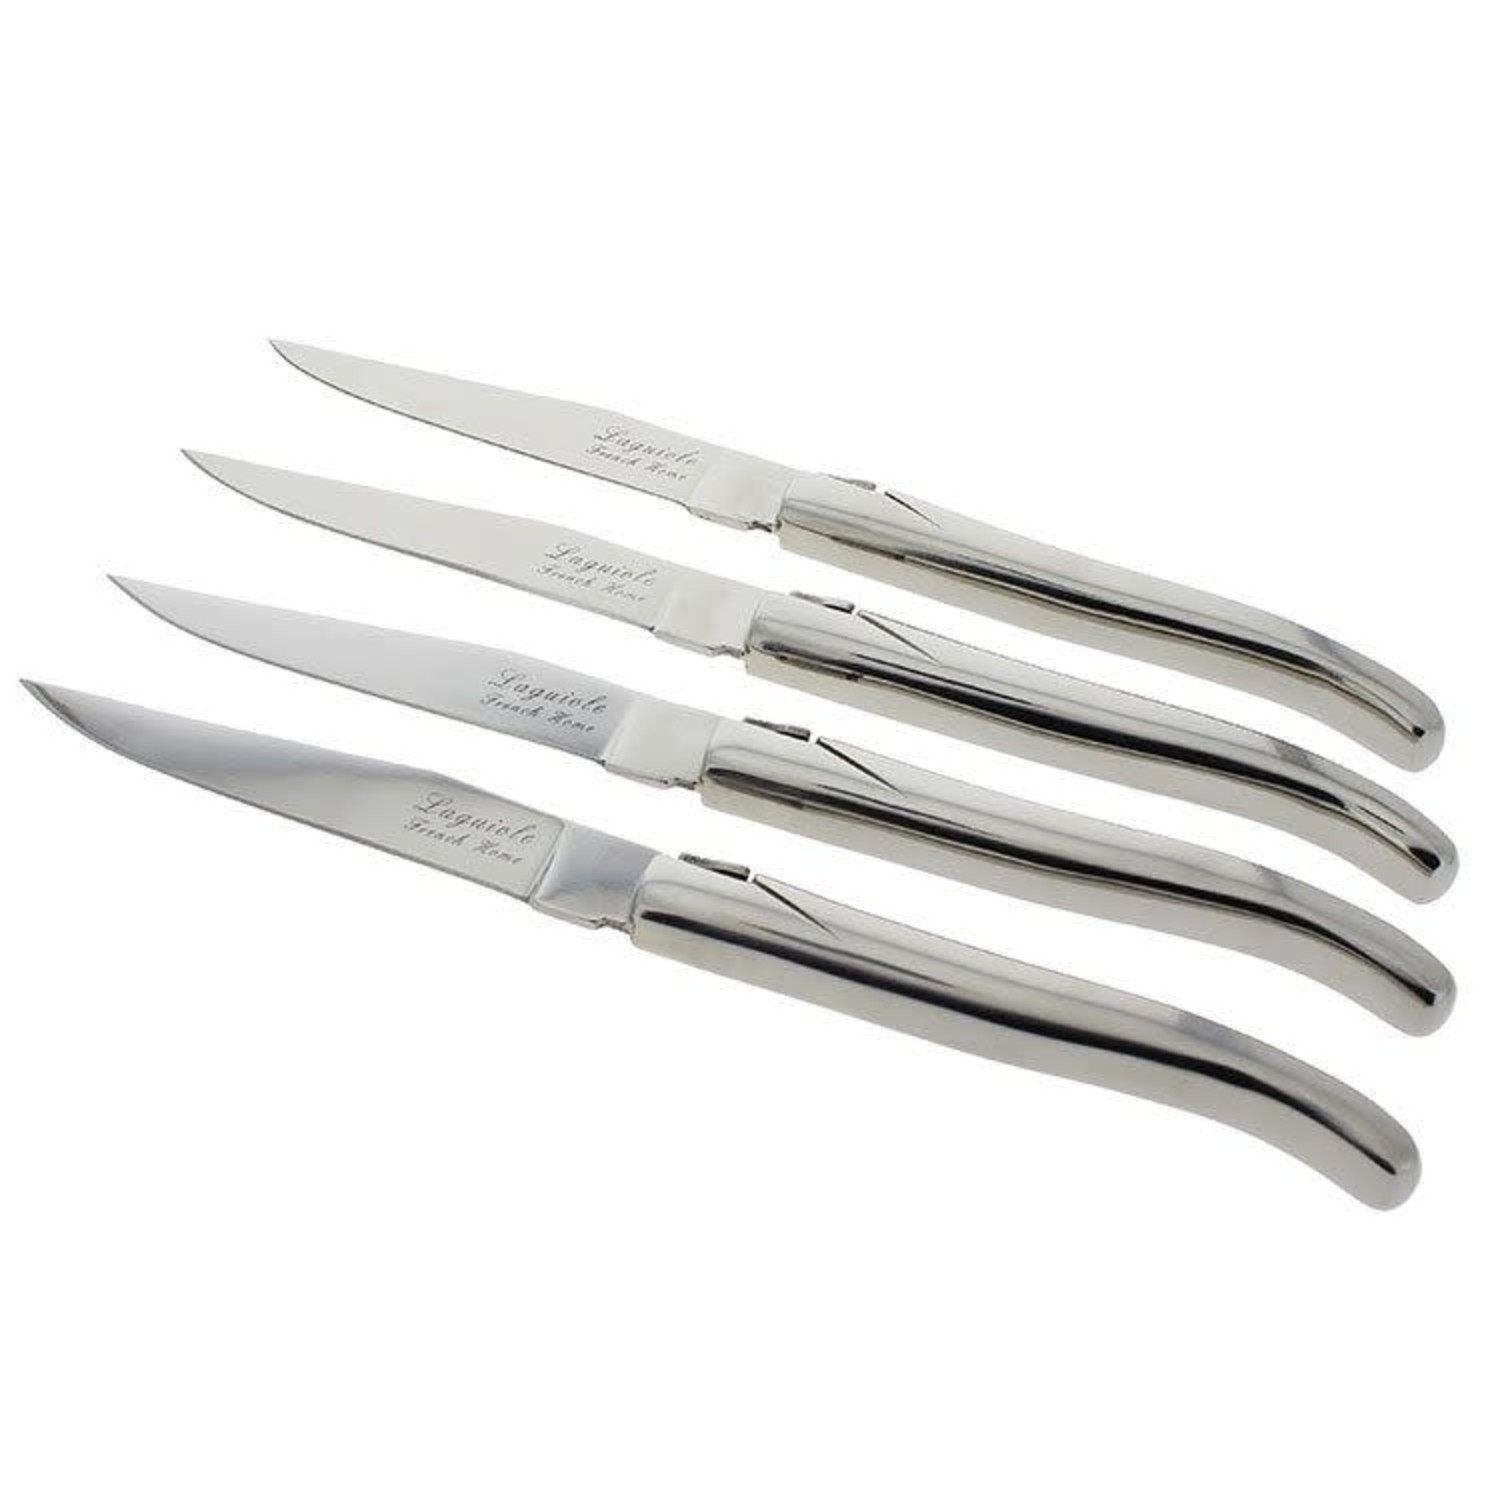 https://cdn.shoplightspeed.com/shops/633447/files/21495658/1500x4000x3/laguiole-heavy-stainless-steel-steak-knives-set-of.jpg